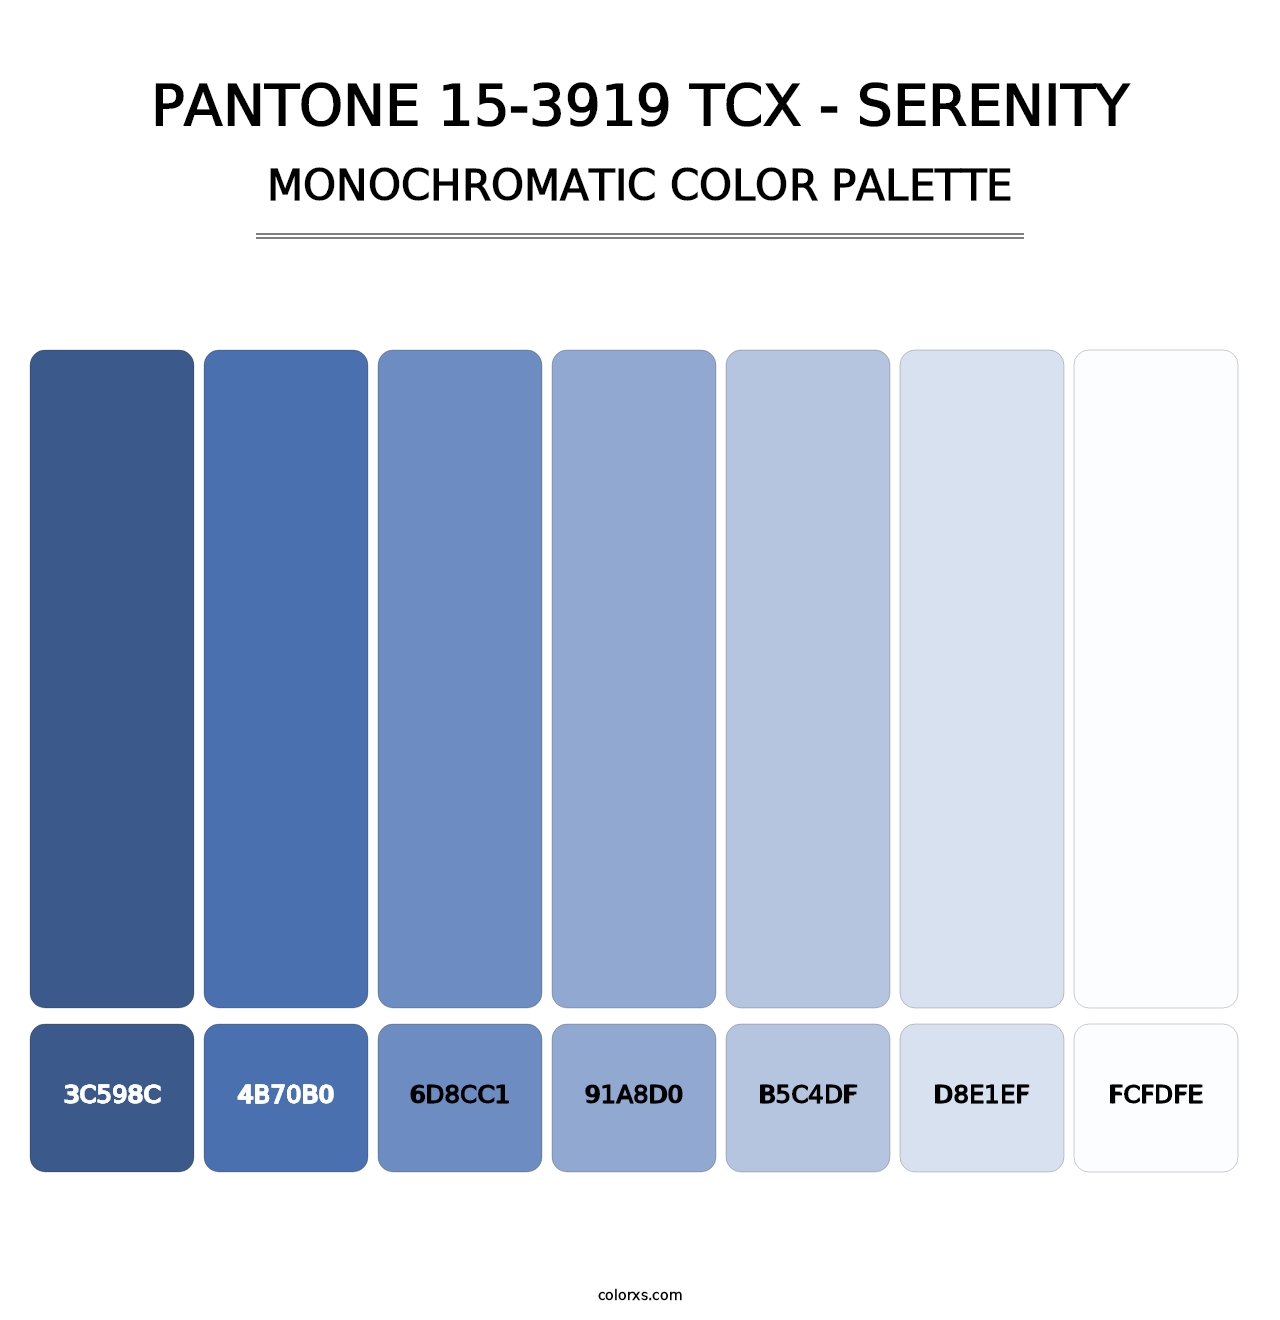 PANTONE 15-3919 TCX - Serenity - Monochromatic Color Palette